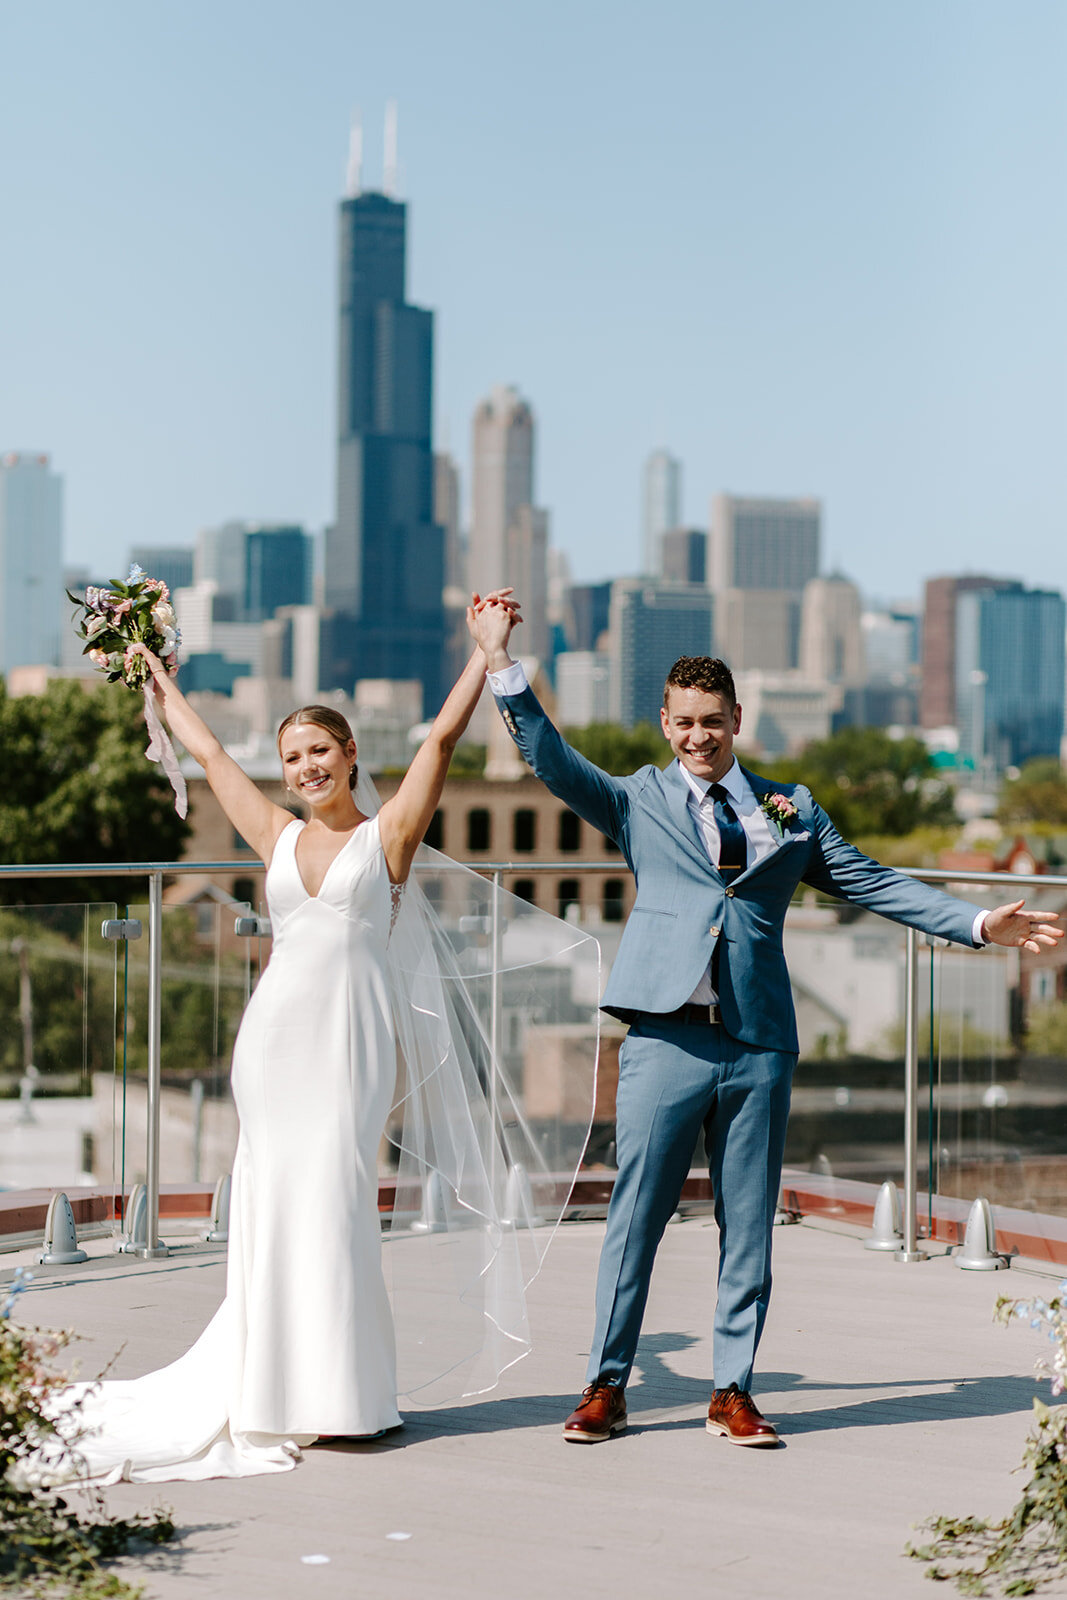 That &ldquo;just married&rdquo; feeling 💍🥂

📸 @kearneyraephoto
.
.
.
#lacunaevents #lacunalofts #chicagoeventvenue #chicagowedding #rooftopwedding #weddingphotography #ChicagoWeddings #ChicagoEvents #brideinspiration #huffpostweddings #weddingforw